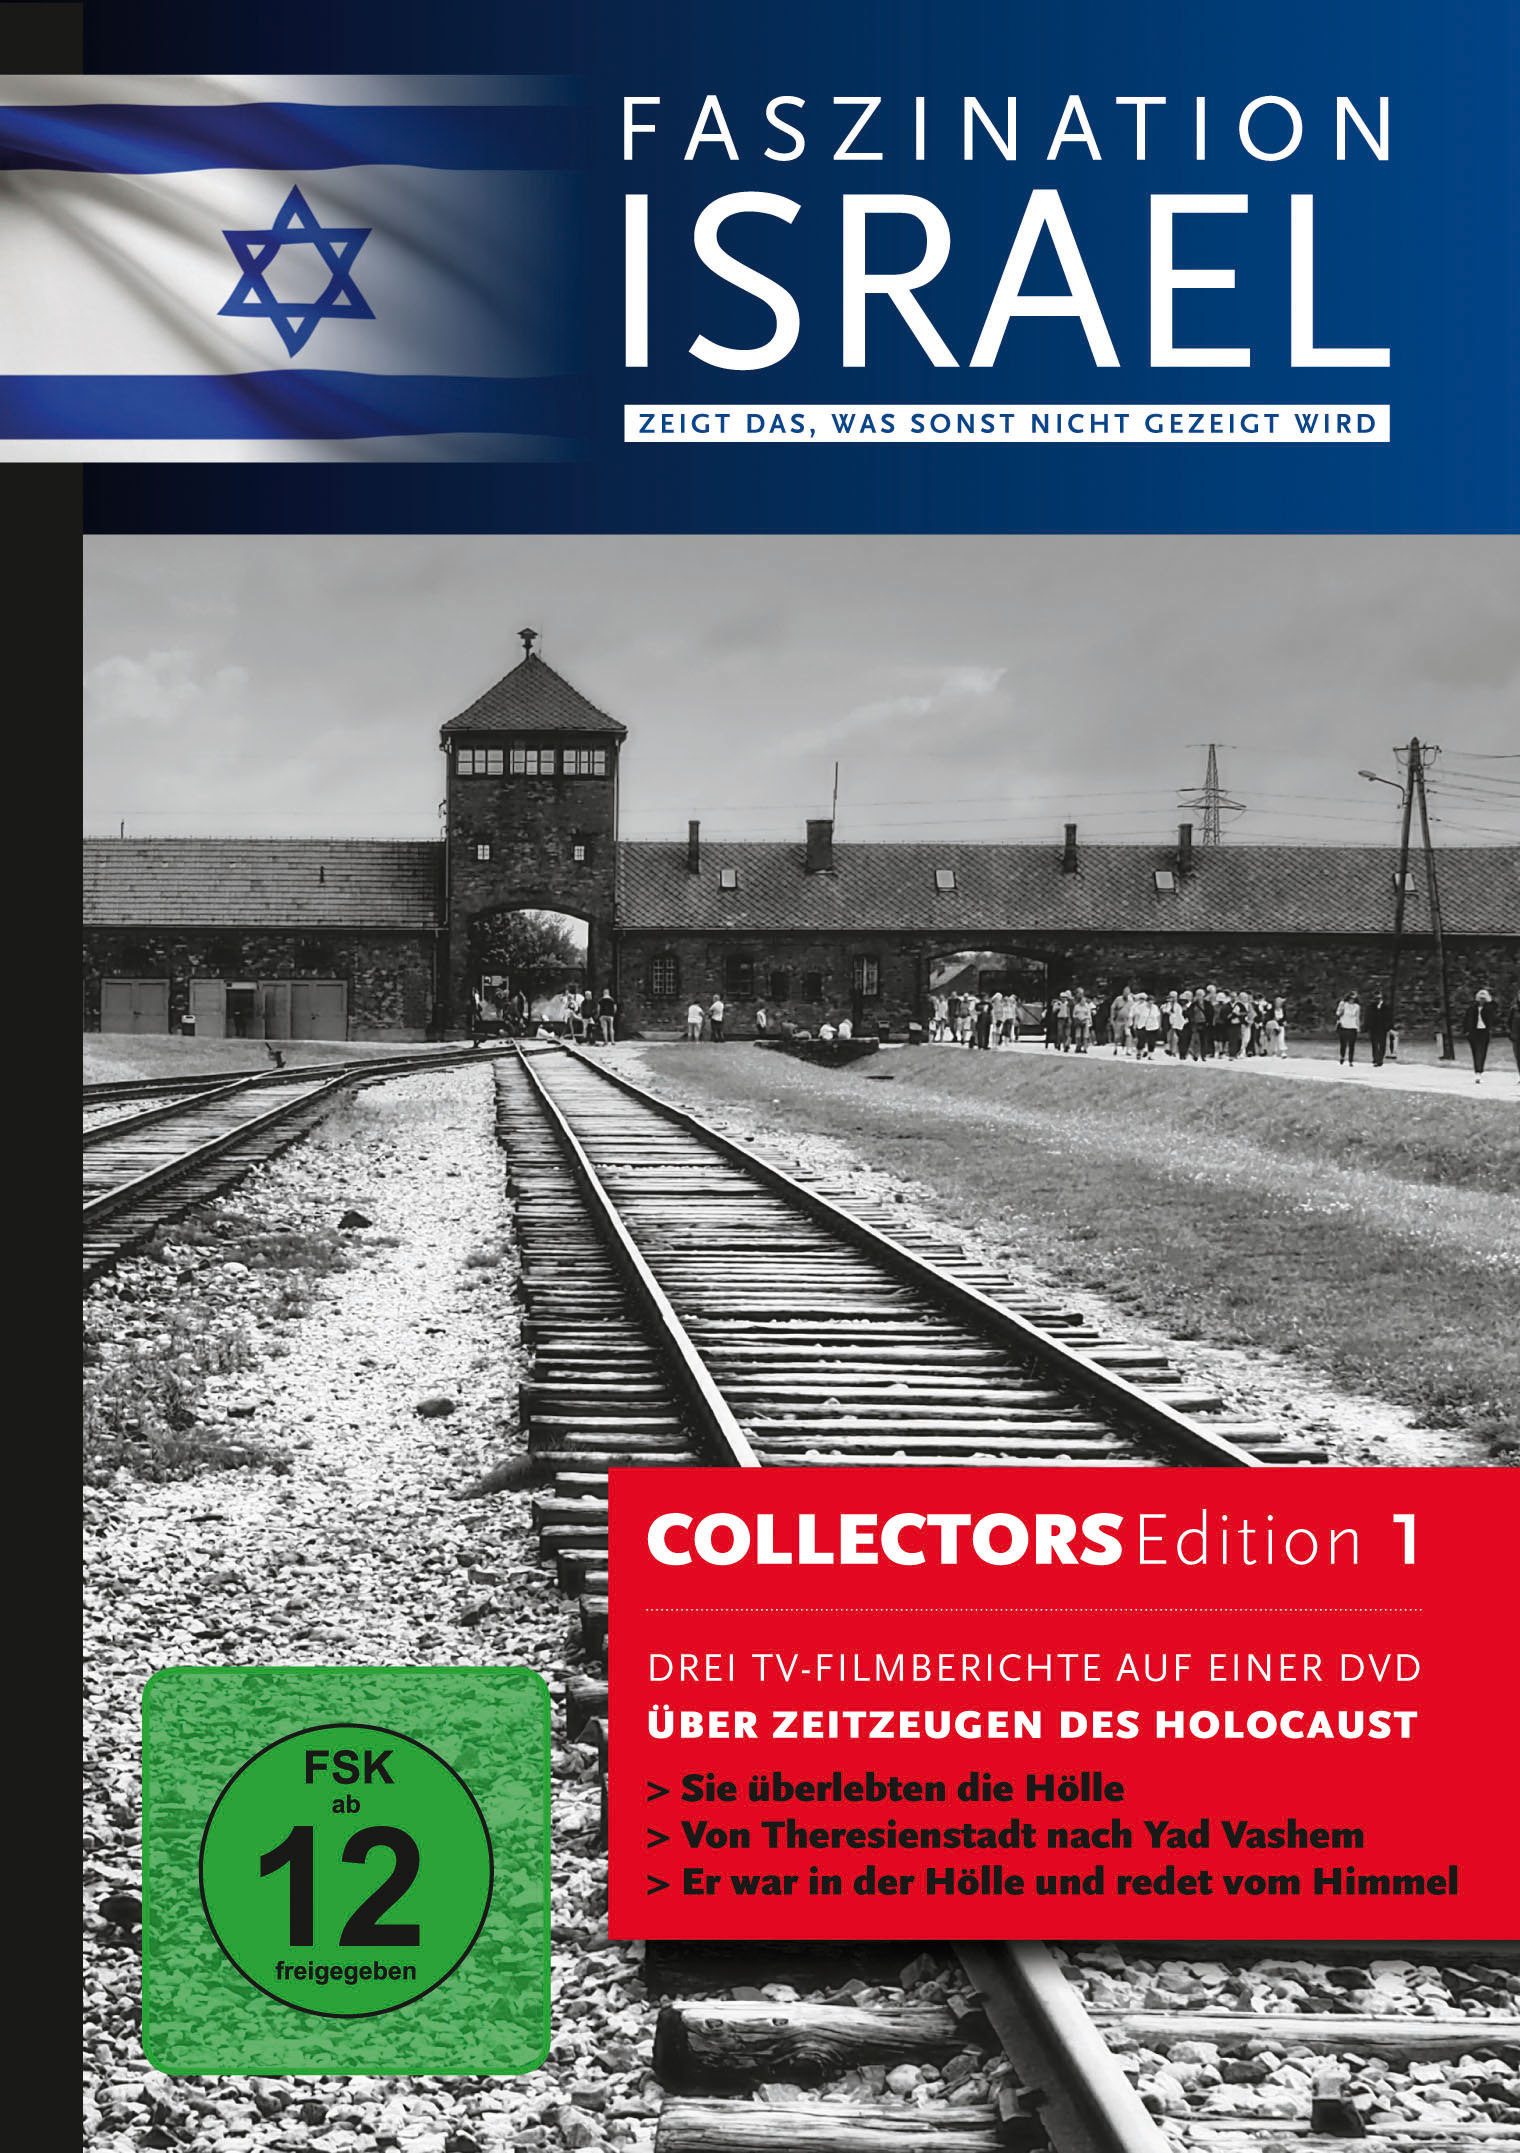 Faszination Israel - Über Zeitzeugen des Holocaust|Collectors Edition 1